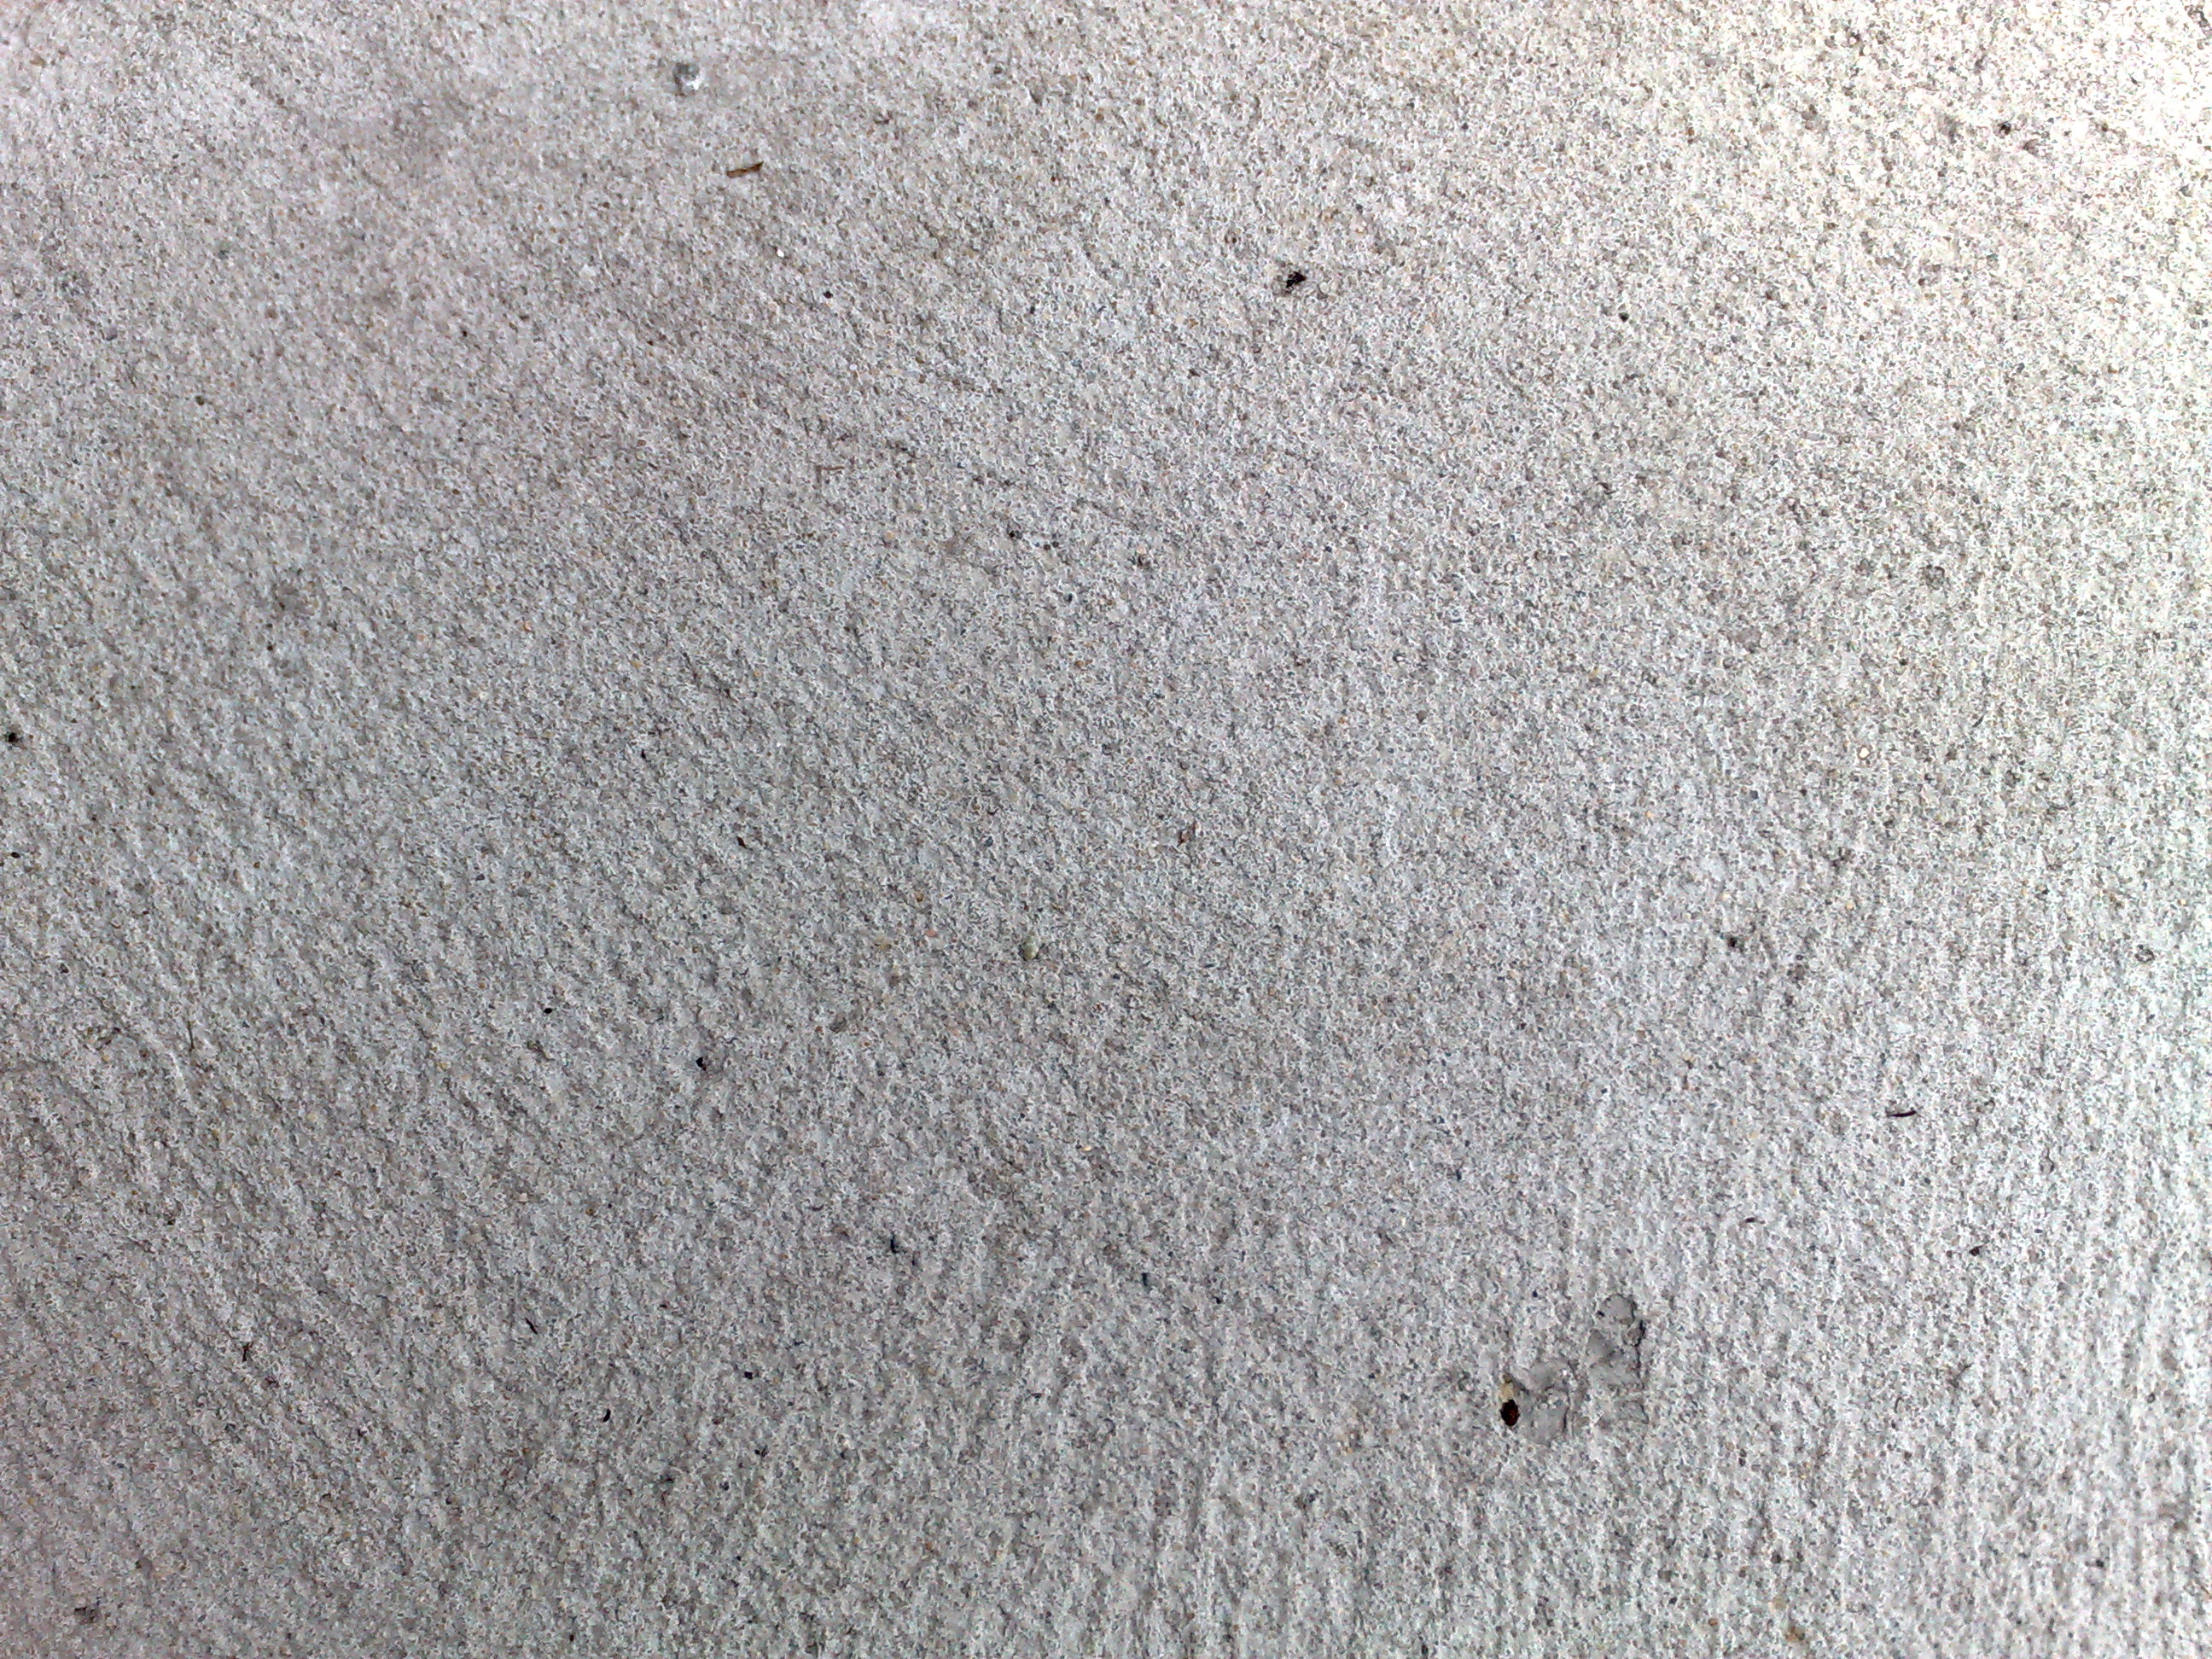 Textured Cement By Darkwyzdom No This Thread Is HD Wallpaper General